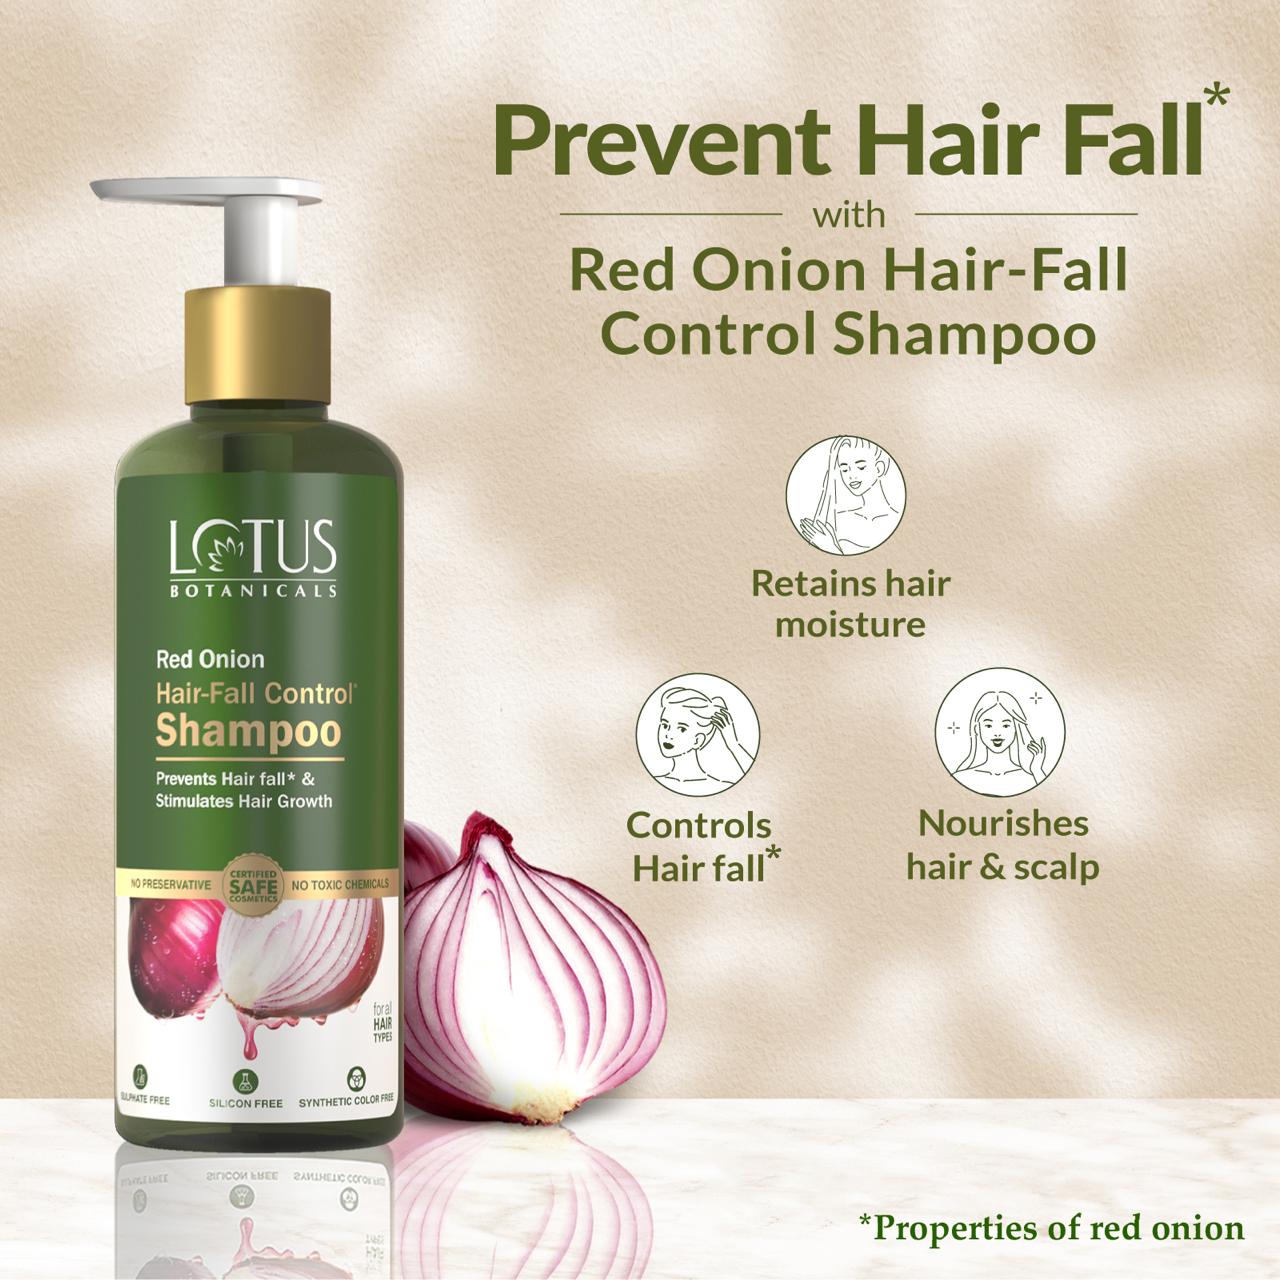 Red Onion Hair-Fall Control* Shampoo